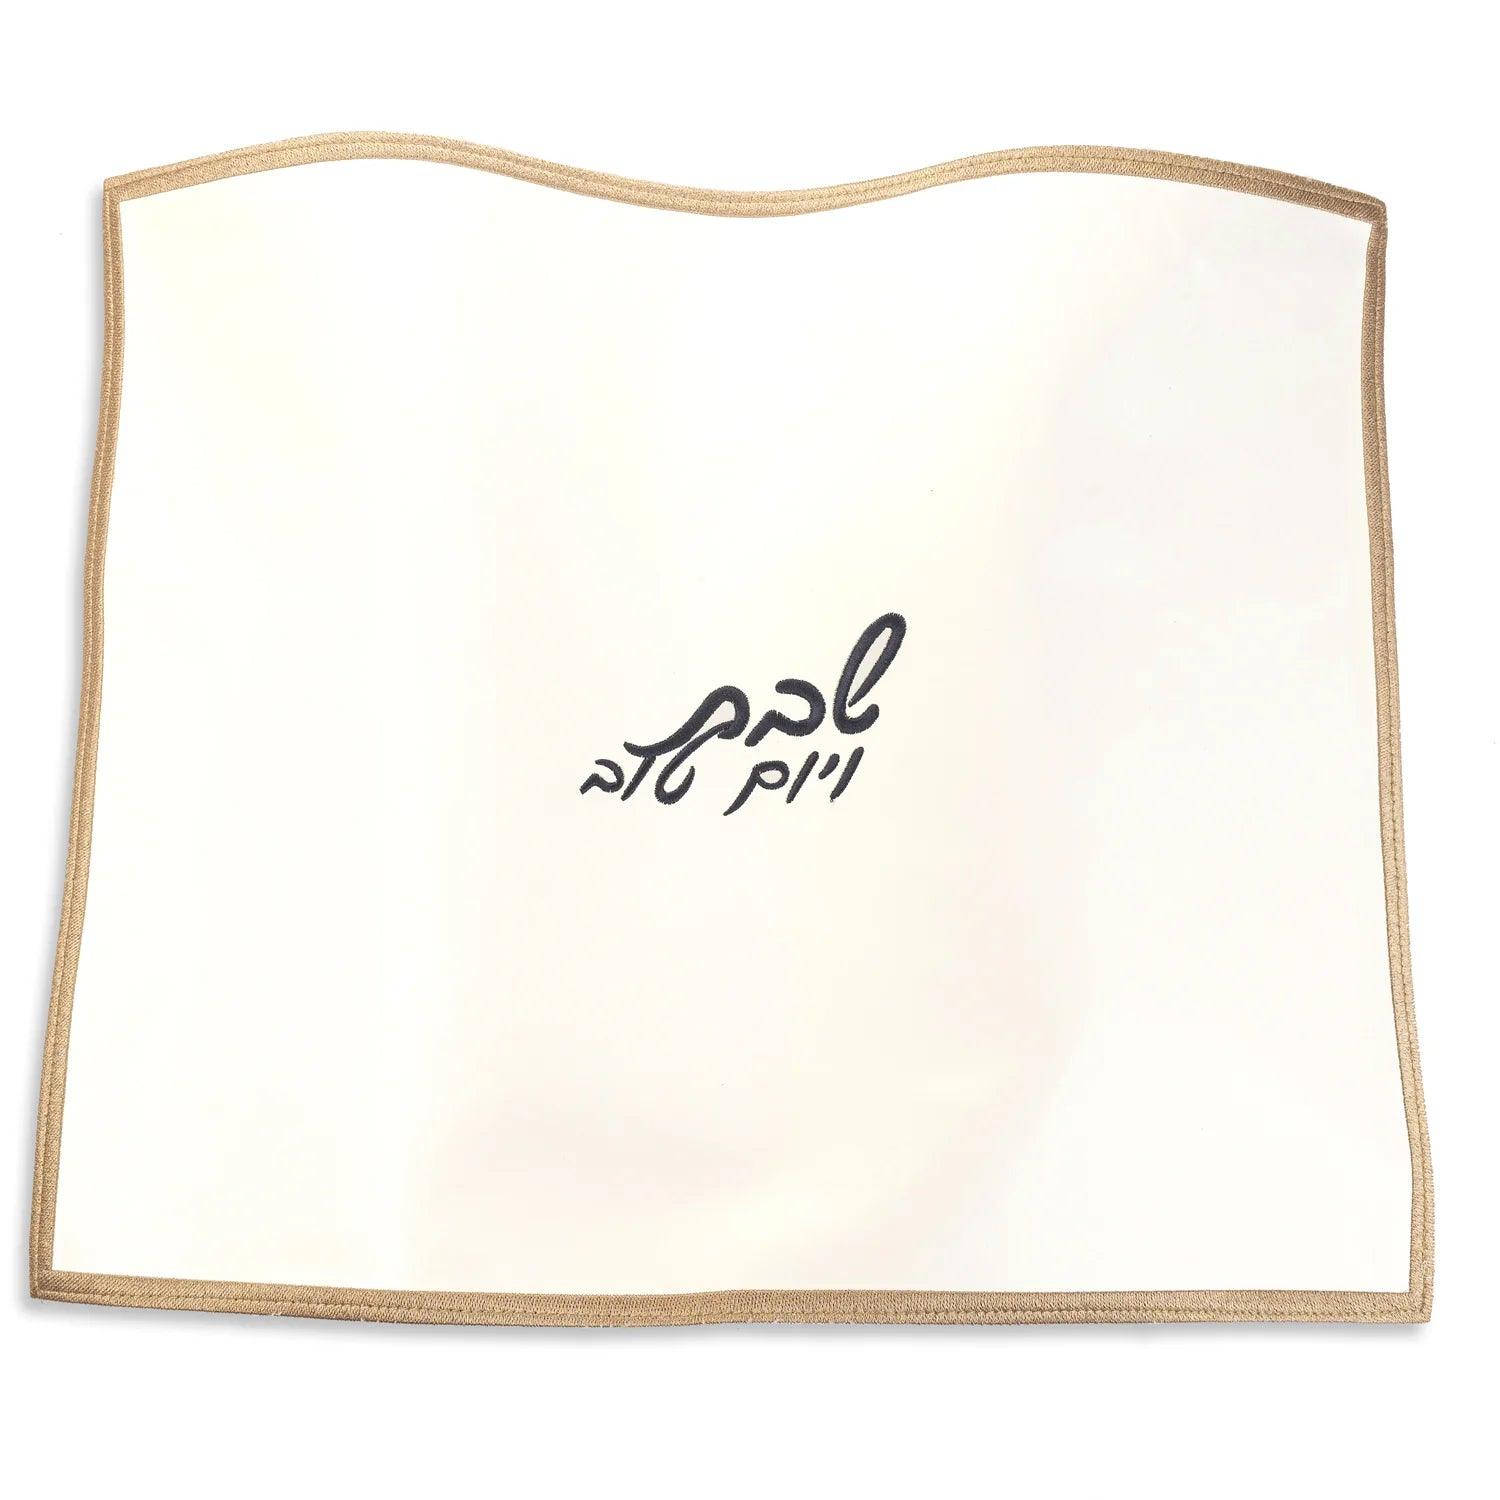 Embroidered Edge Challah Cover - Elegant Linen